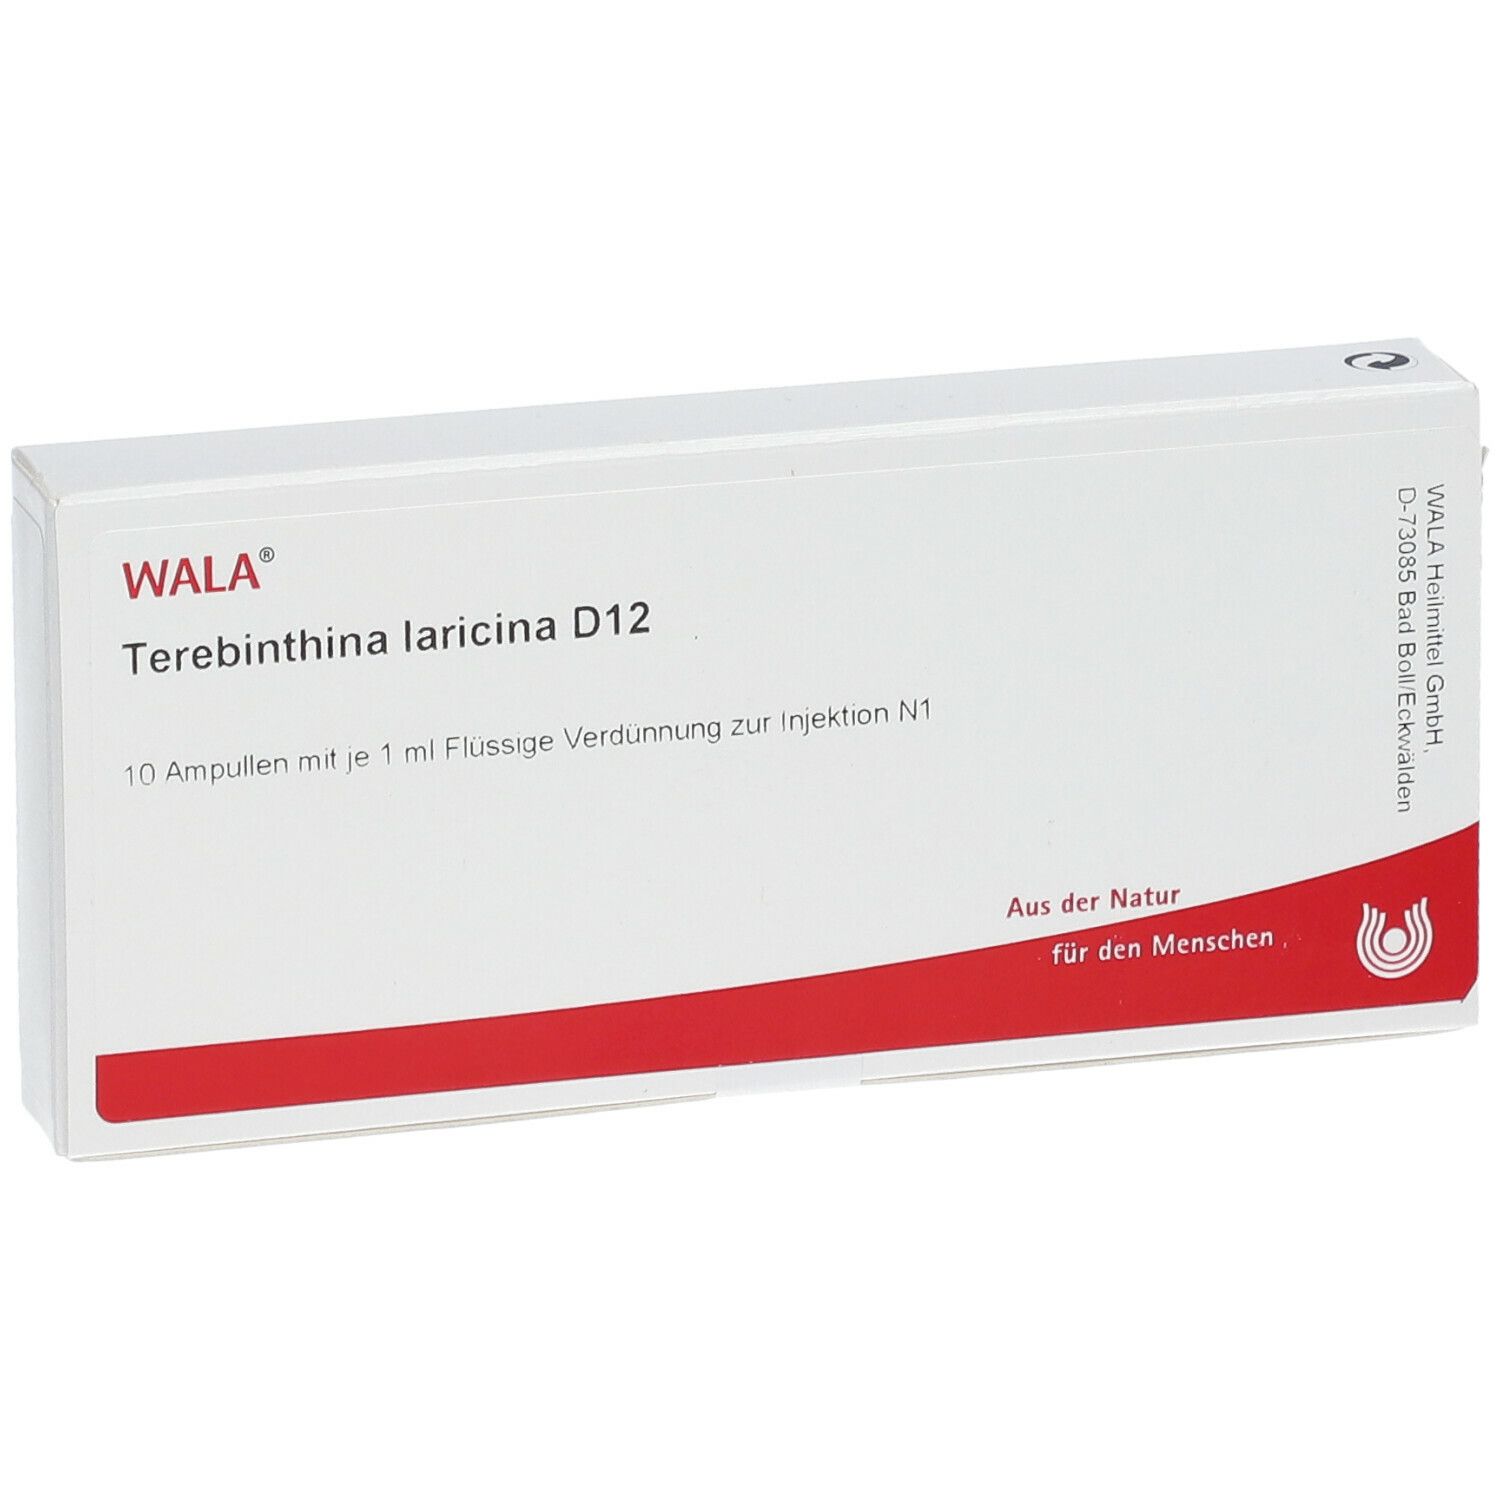 WALA® Terebinthina laricina D 12